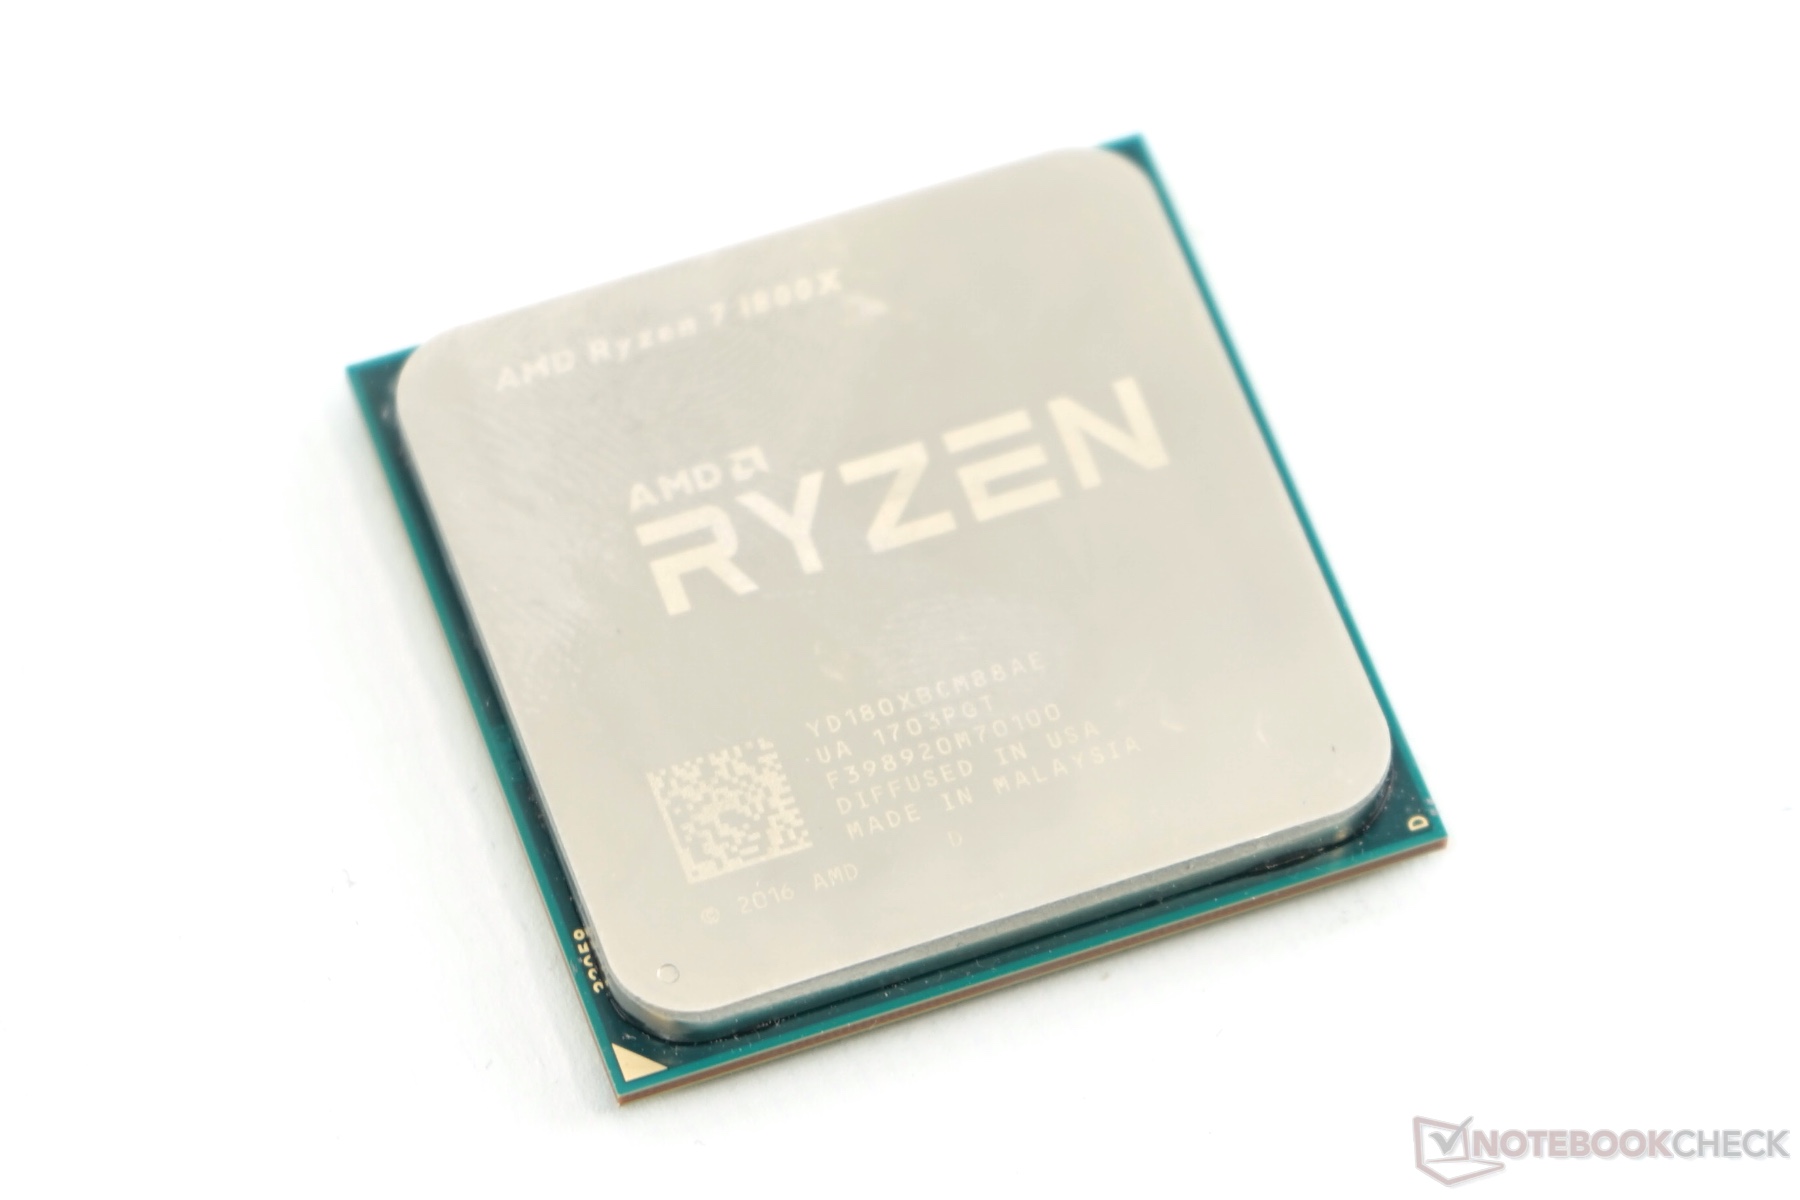 AMD Ryzen 7 1800X SoC - Benchmarks and Specs - NotebookCheck.net Tech